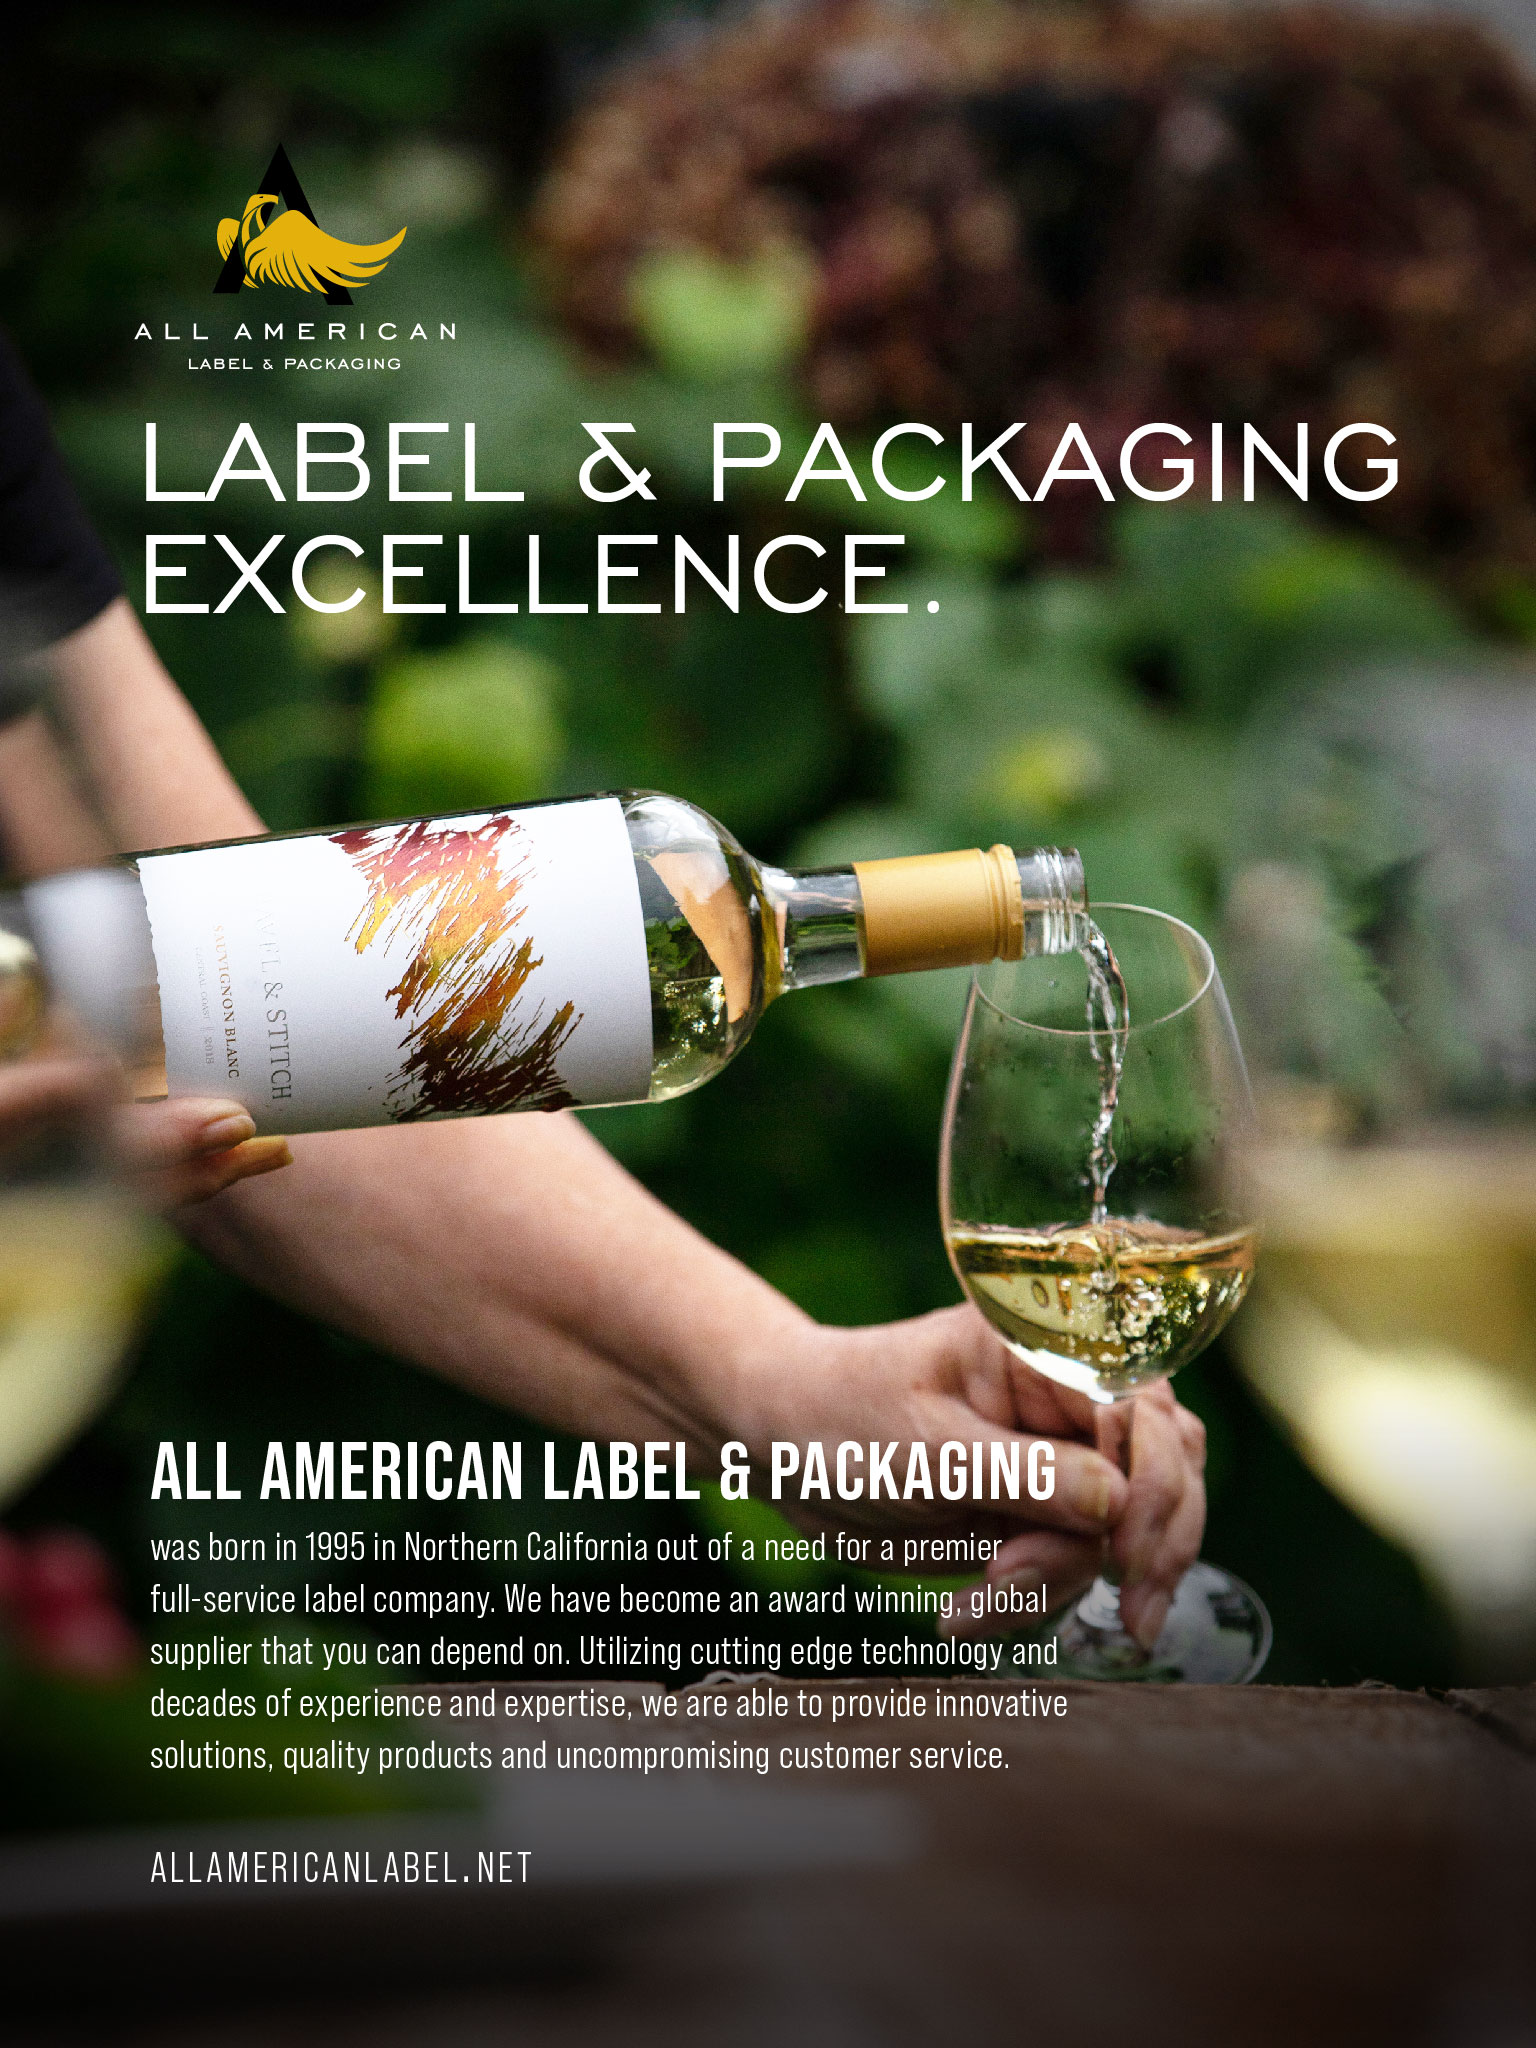 All American Label